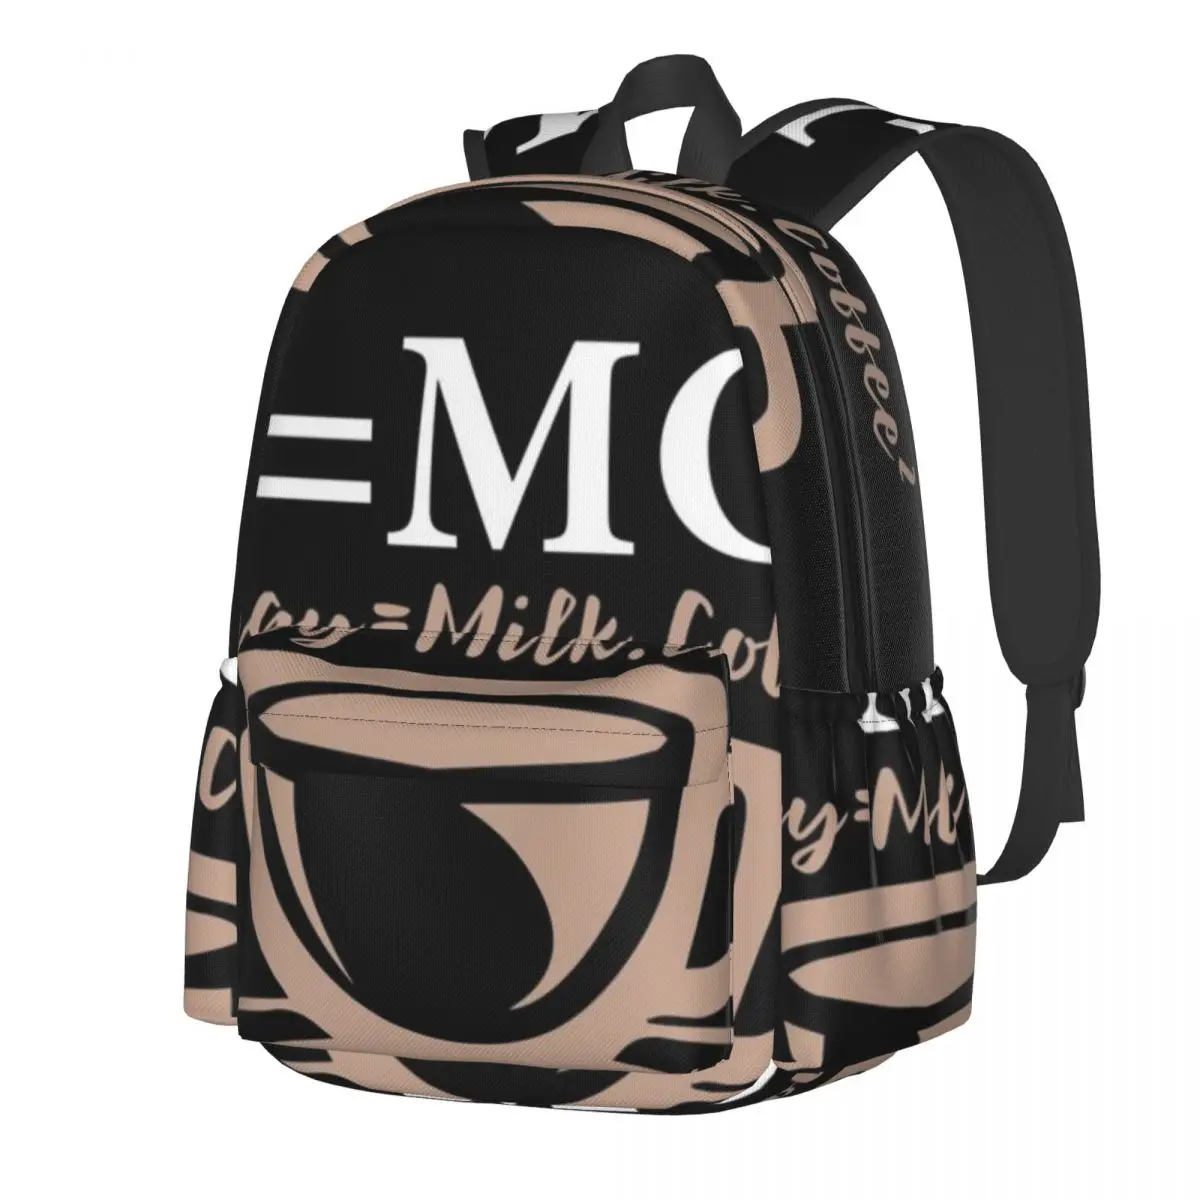 

E=mc2 Energy Milk Coffee Backpack Funny Words Camping Backpacks Teen Funny High School Bags Design Durable Rucksack